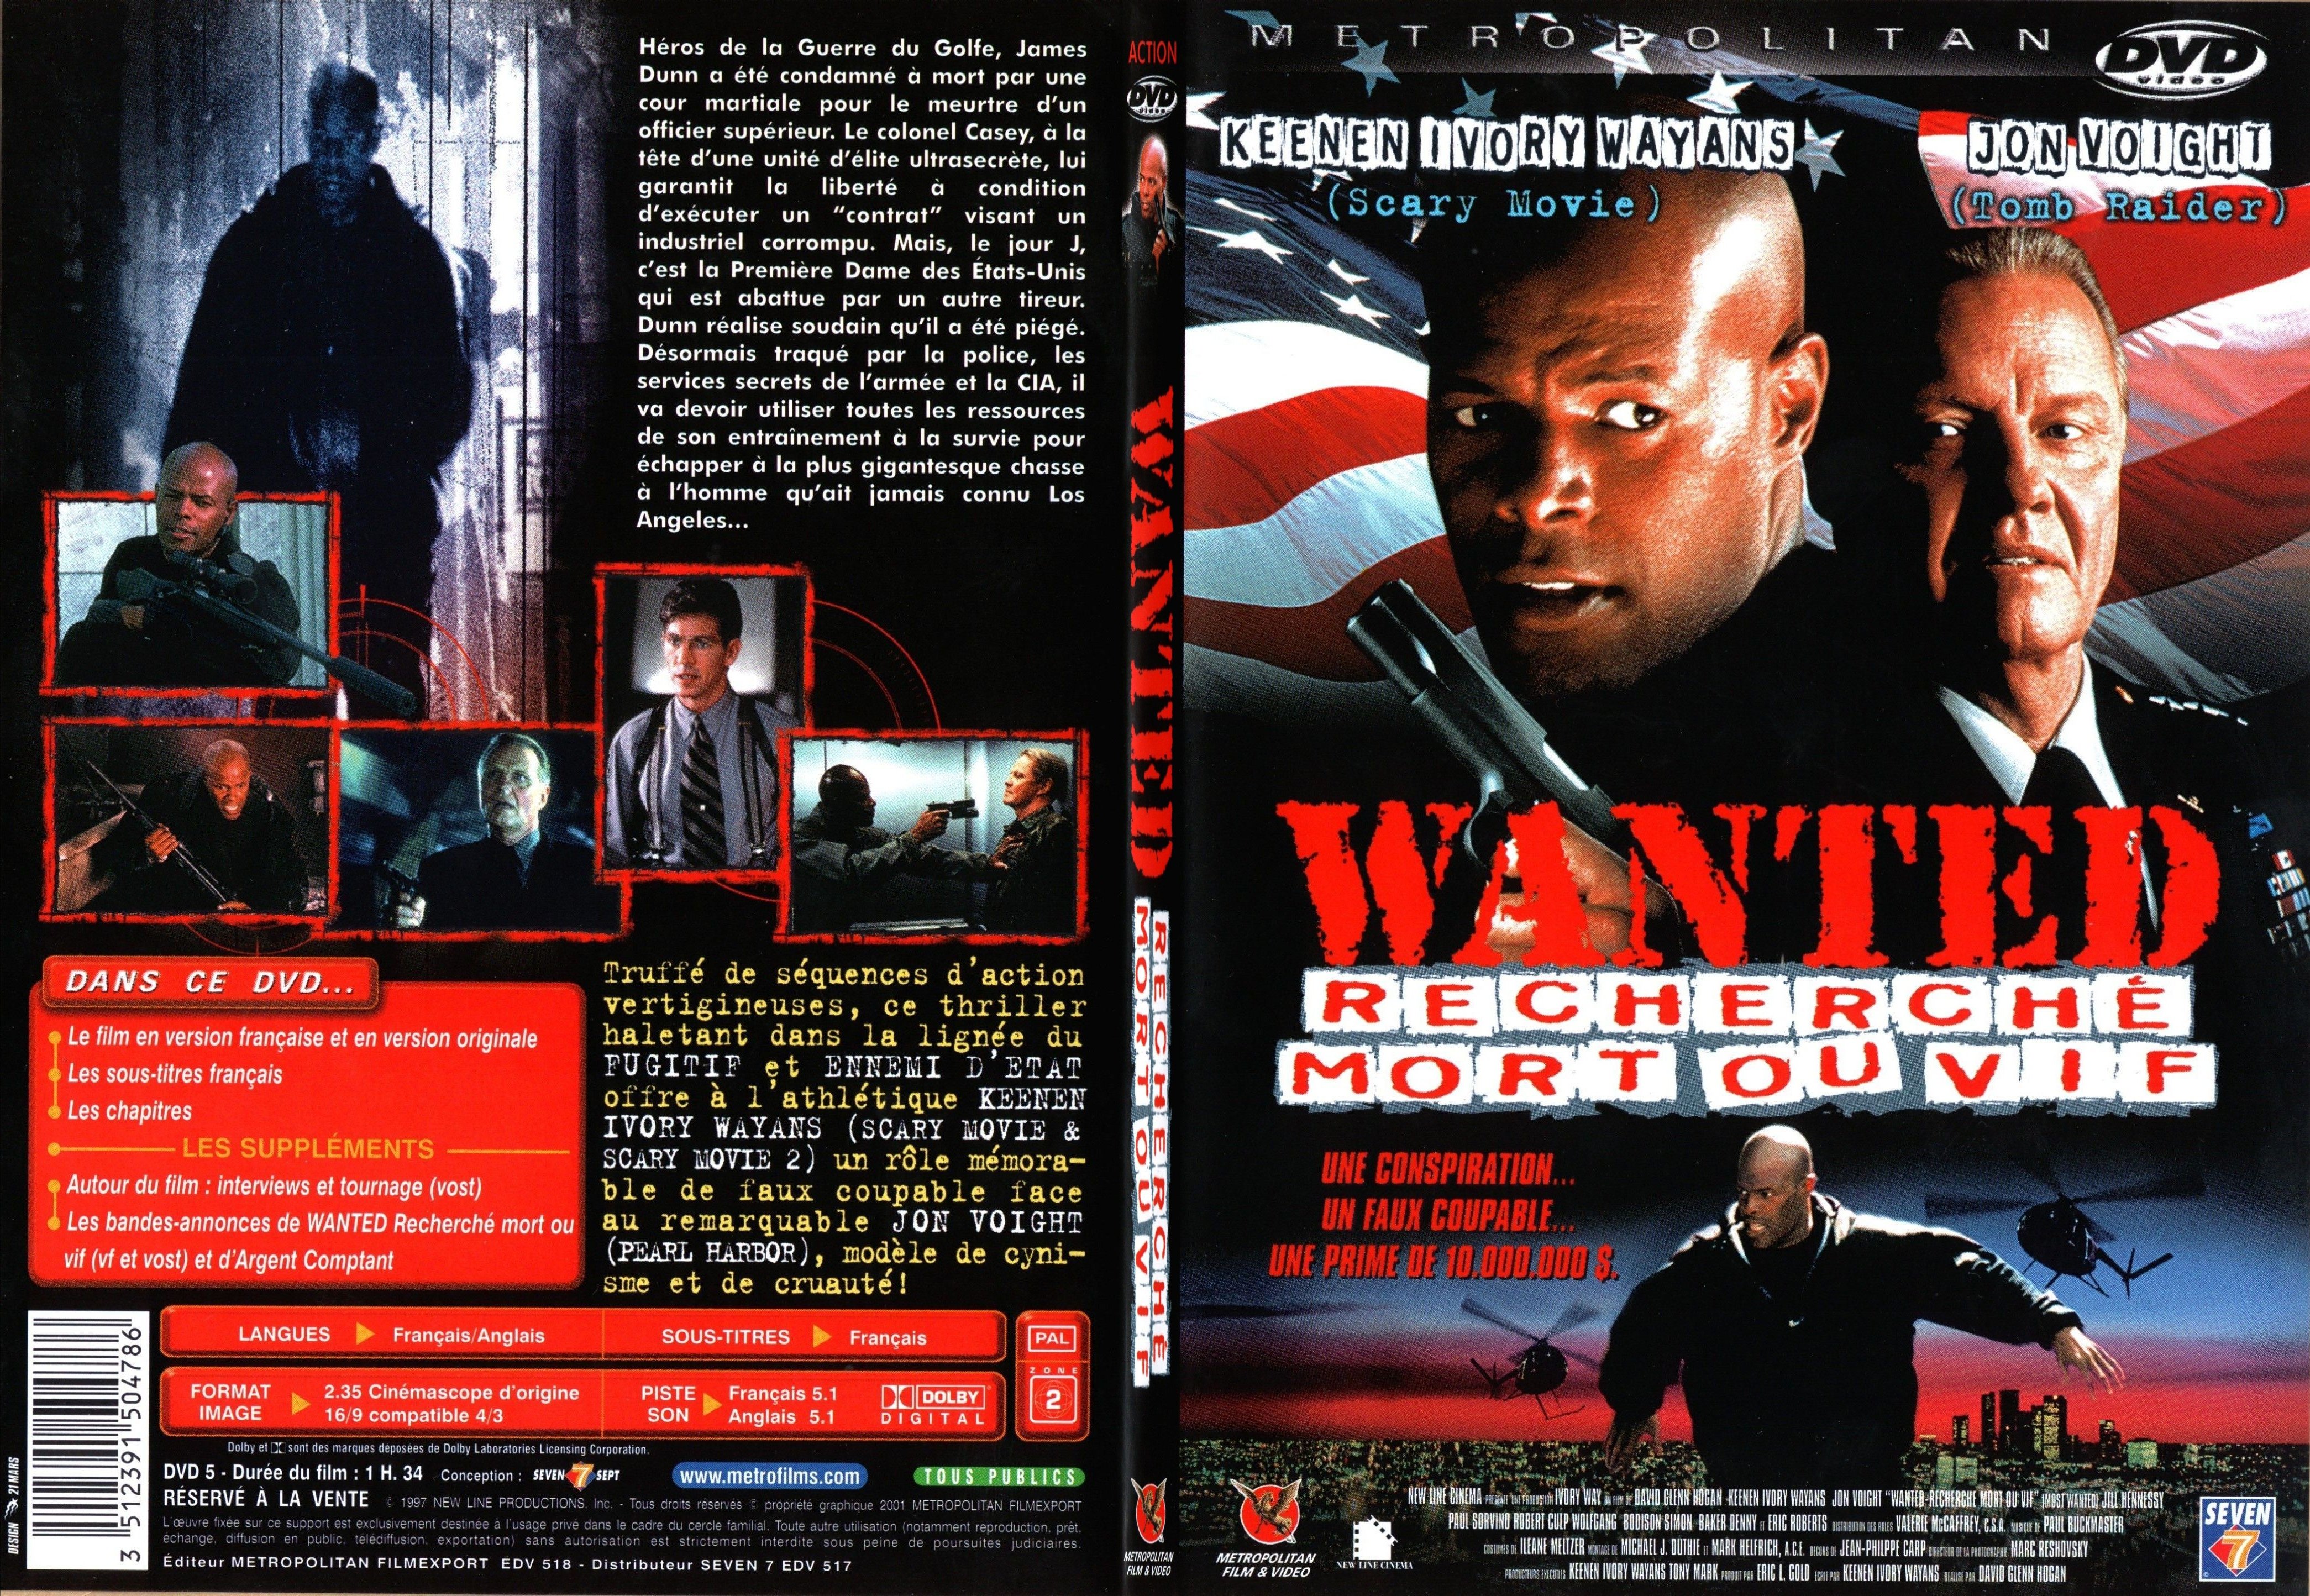 Jaquette DVD Wanted recherche mort ou vif - SLIM